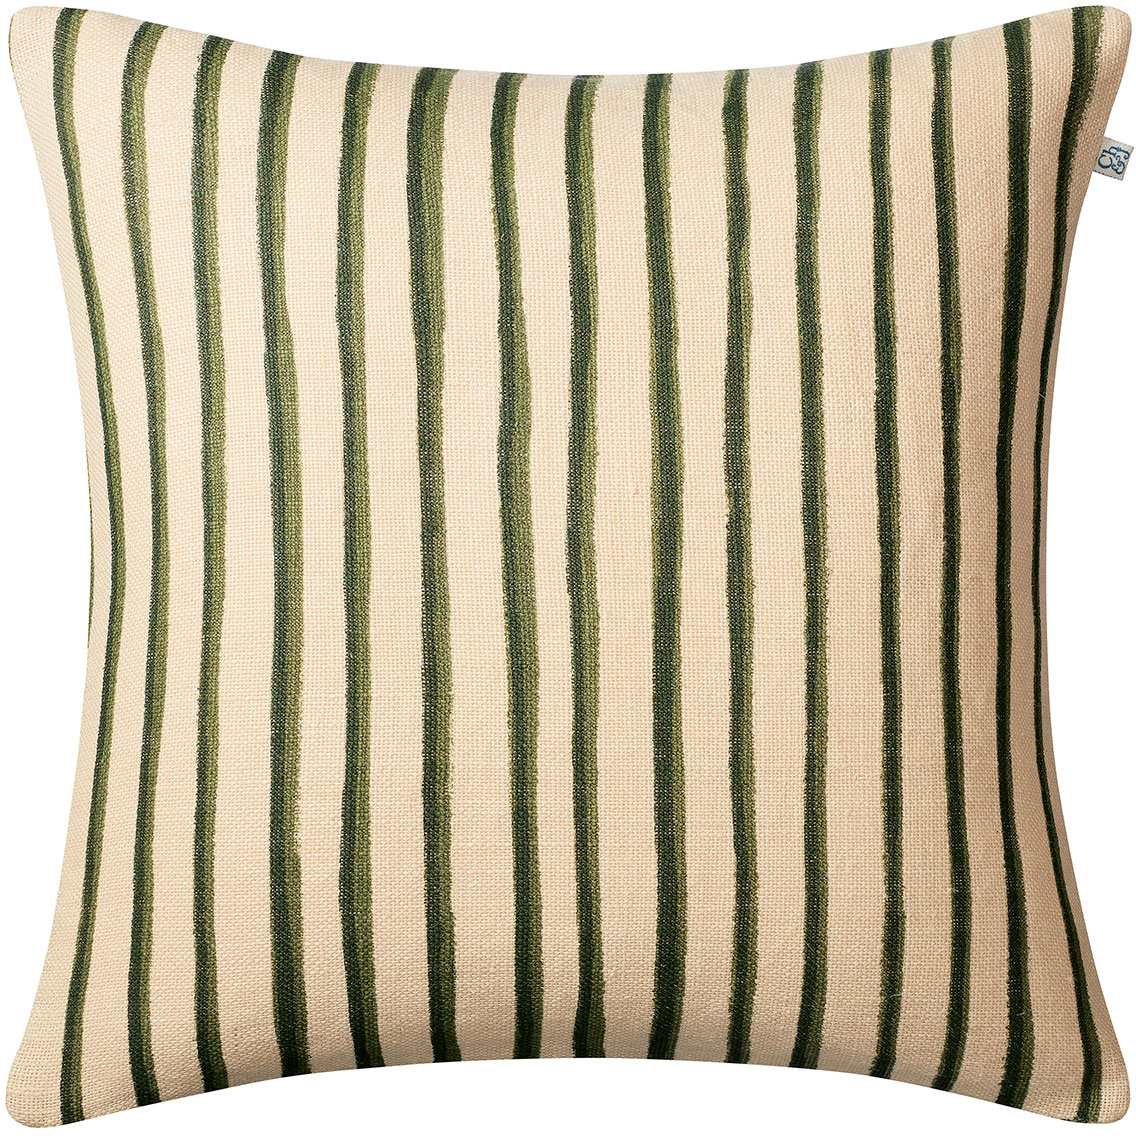 Jaipur Stripe Cushion Cover 50x50 cm, Light Beige / Cactus Green / Green